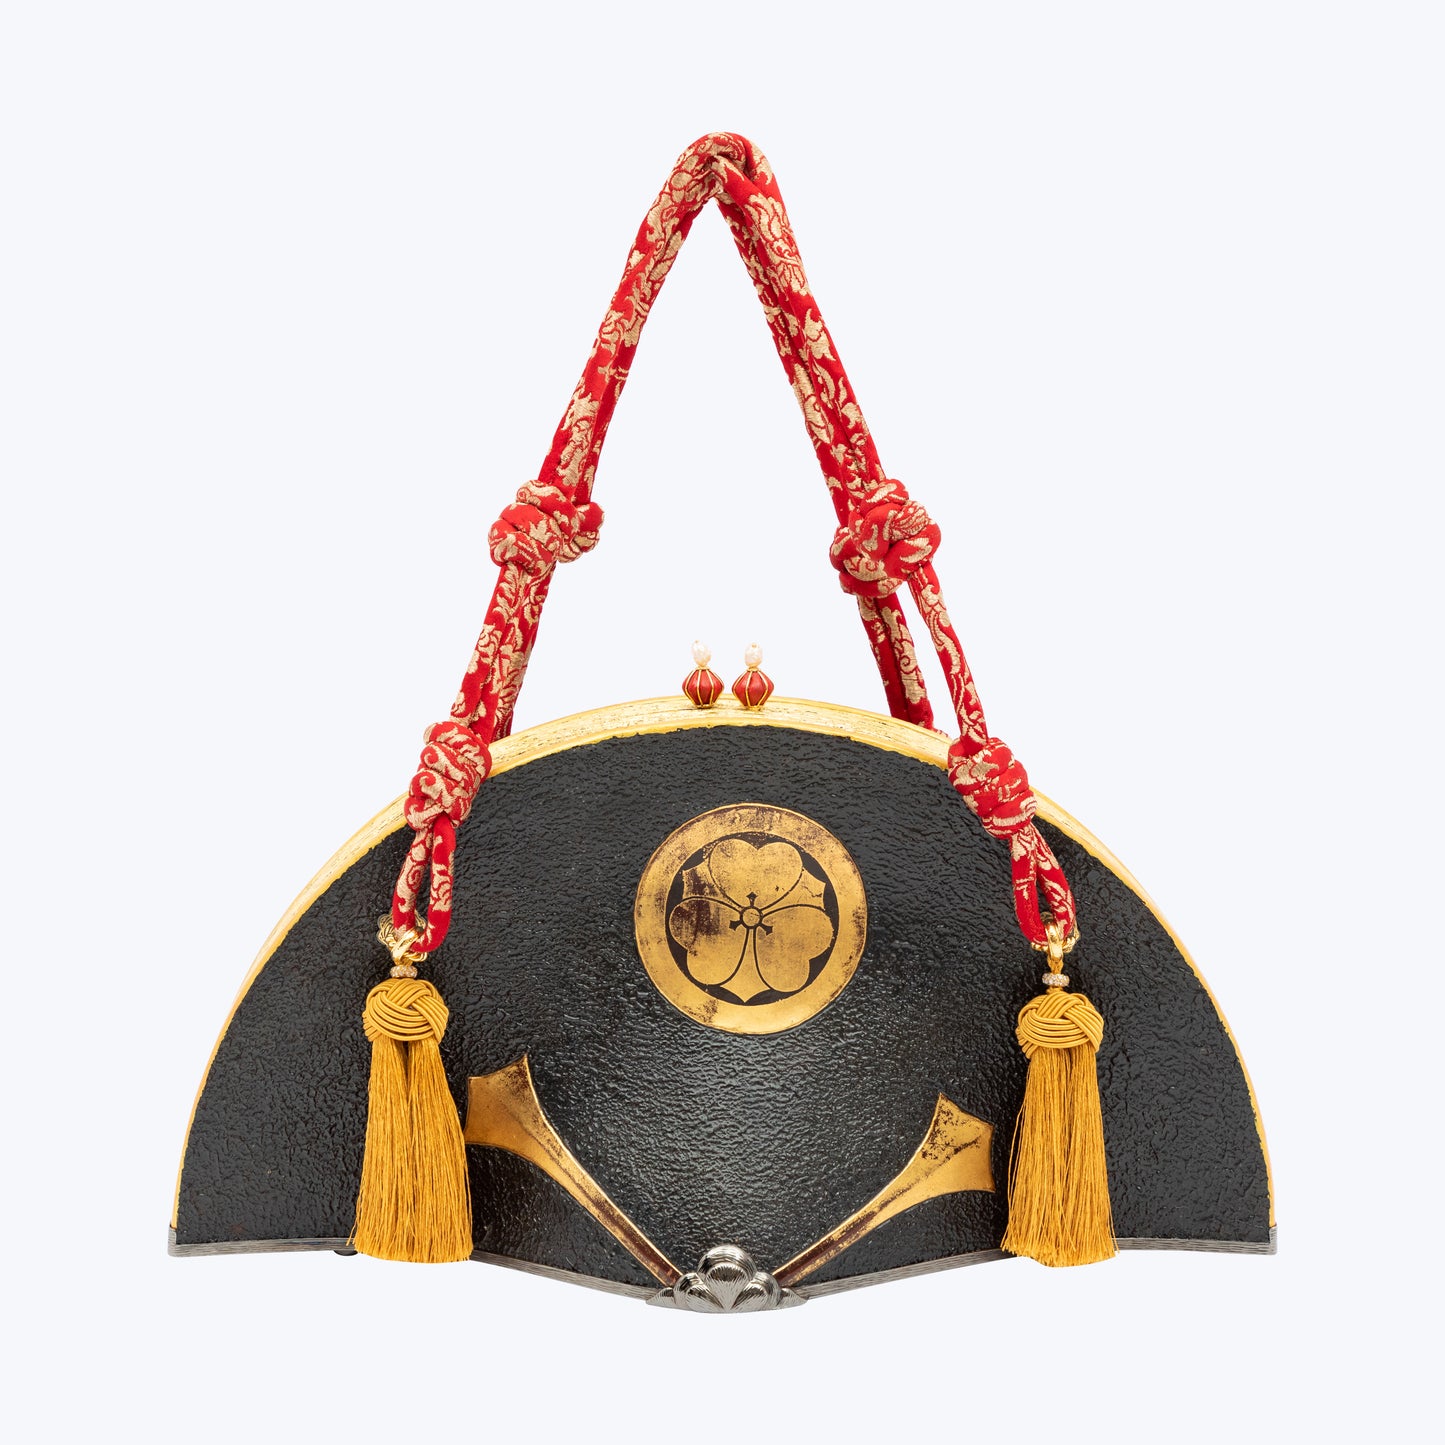 Japanese Samurai “Sakai Clan” Crested Hat Handbag